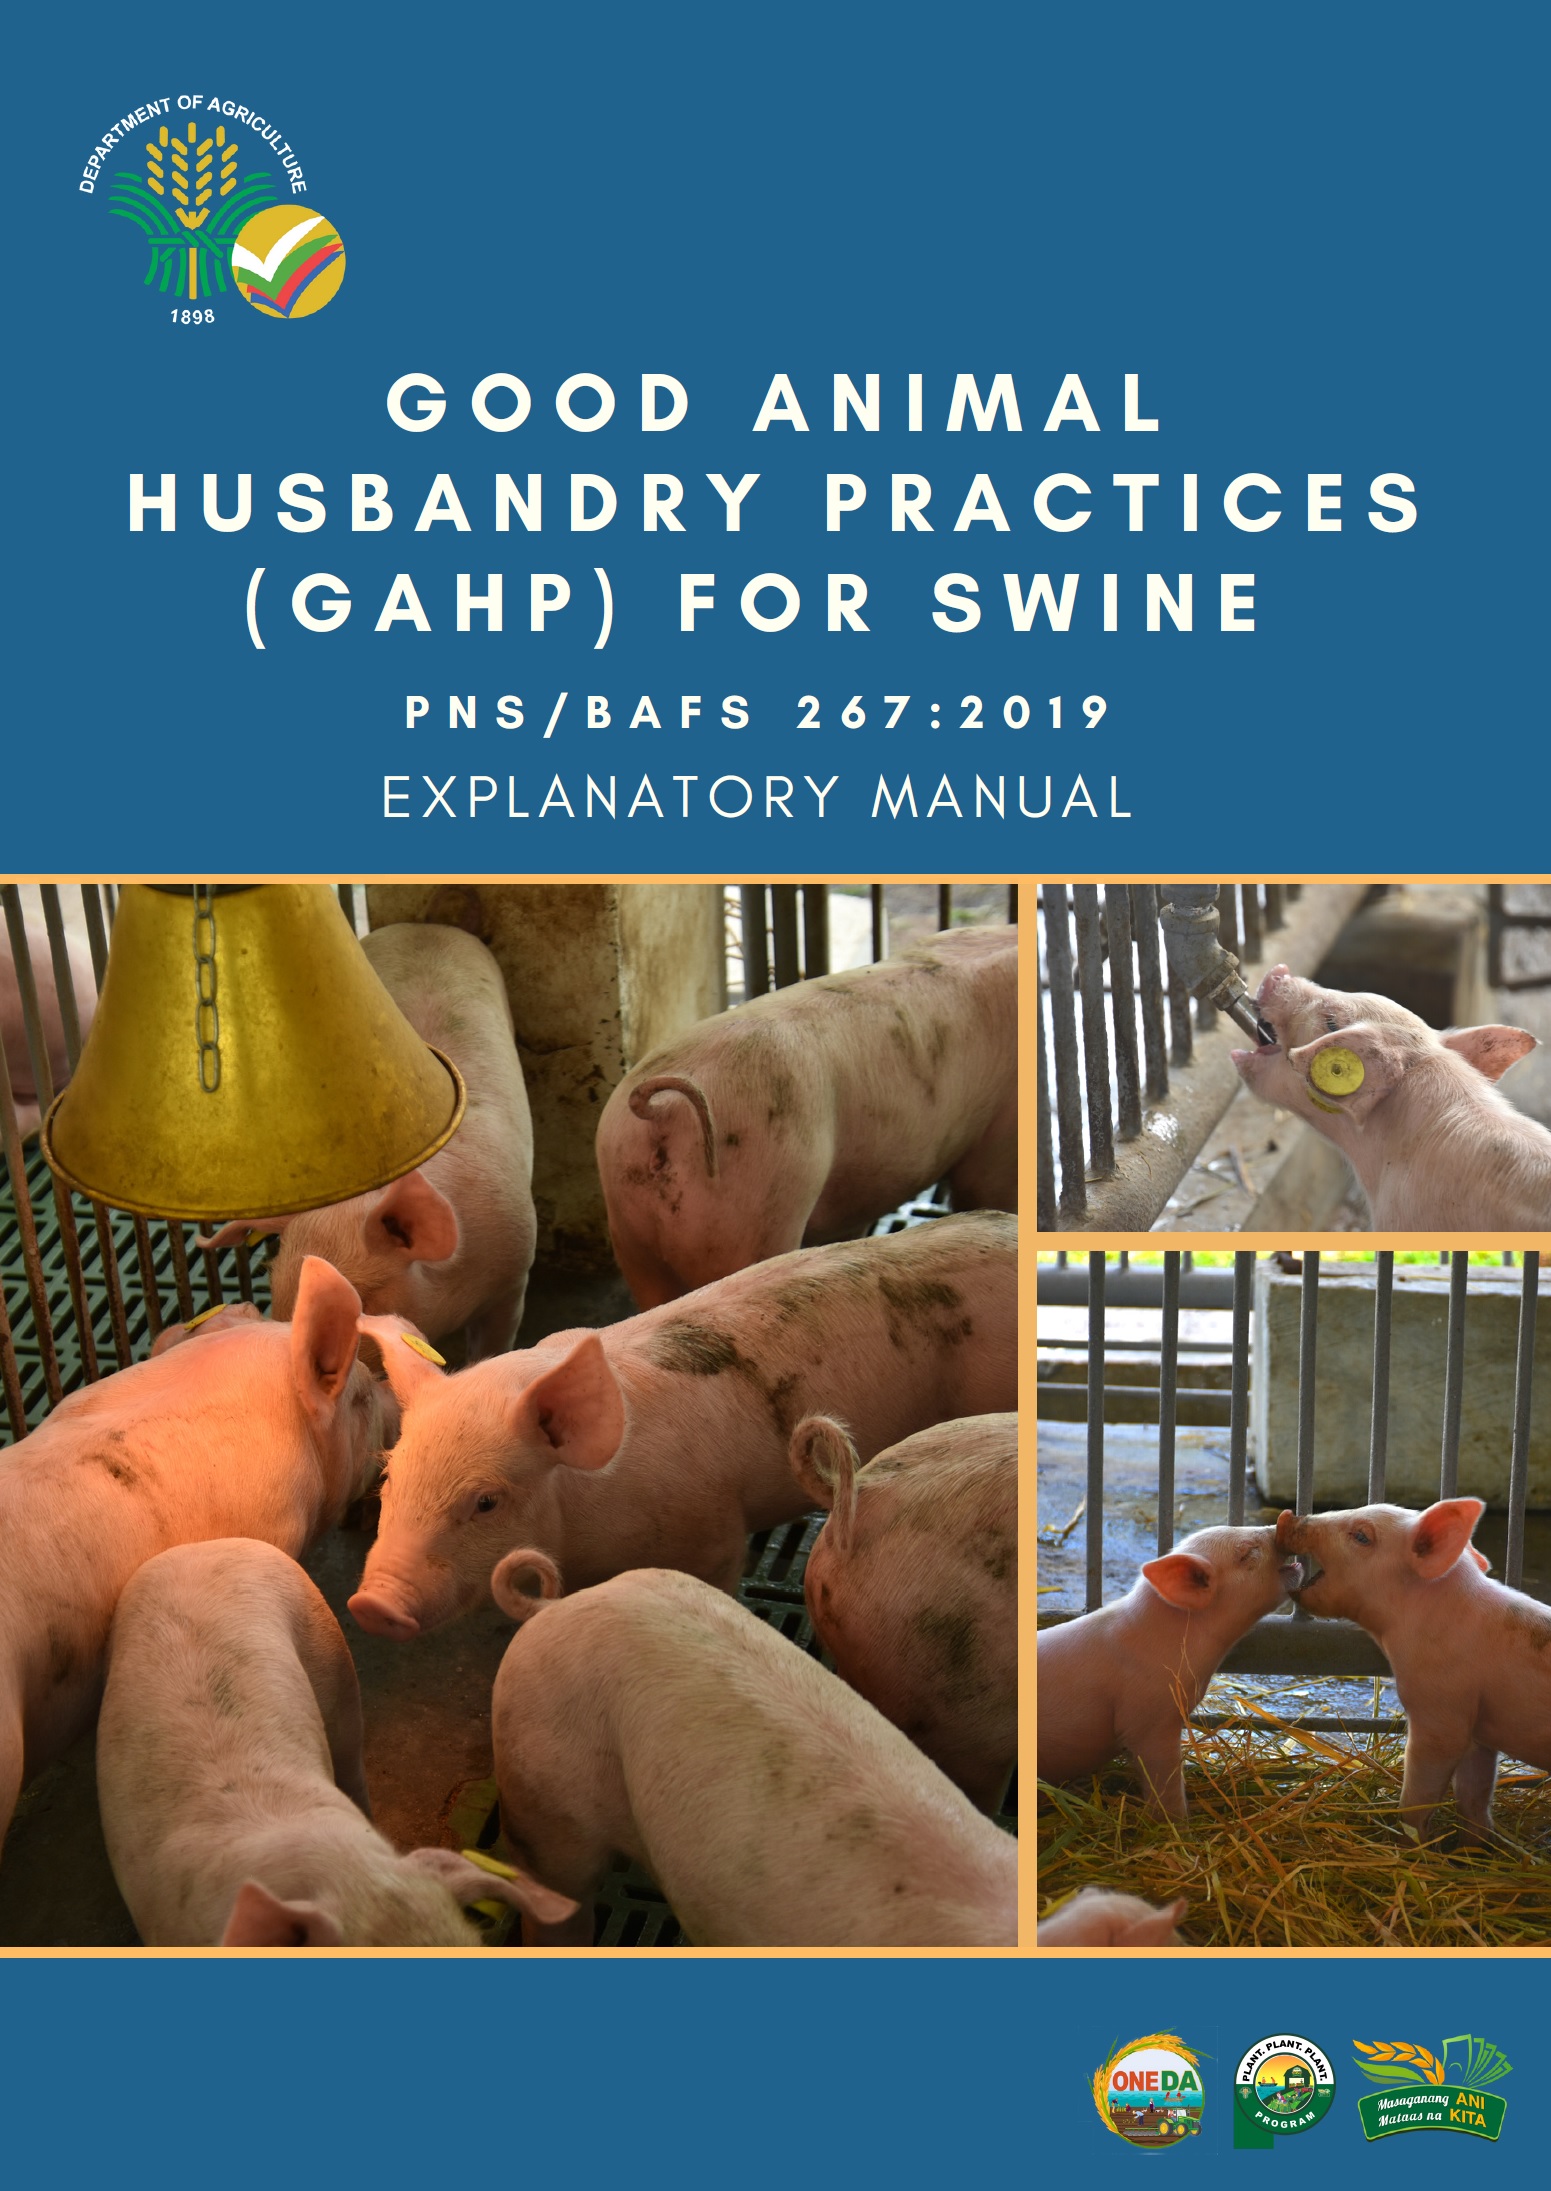 Publications – PCSP – Philippine College of Swine Pratitioners